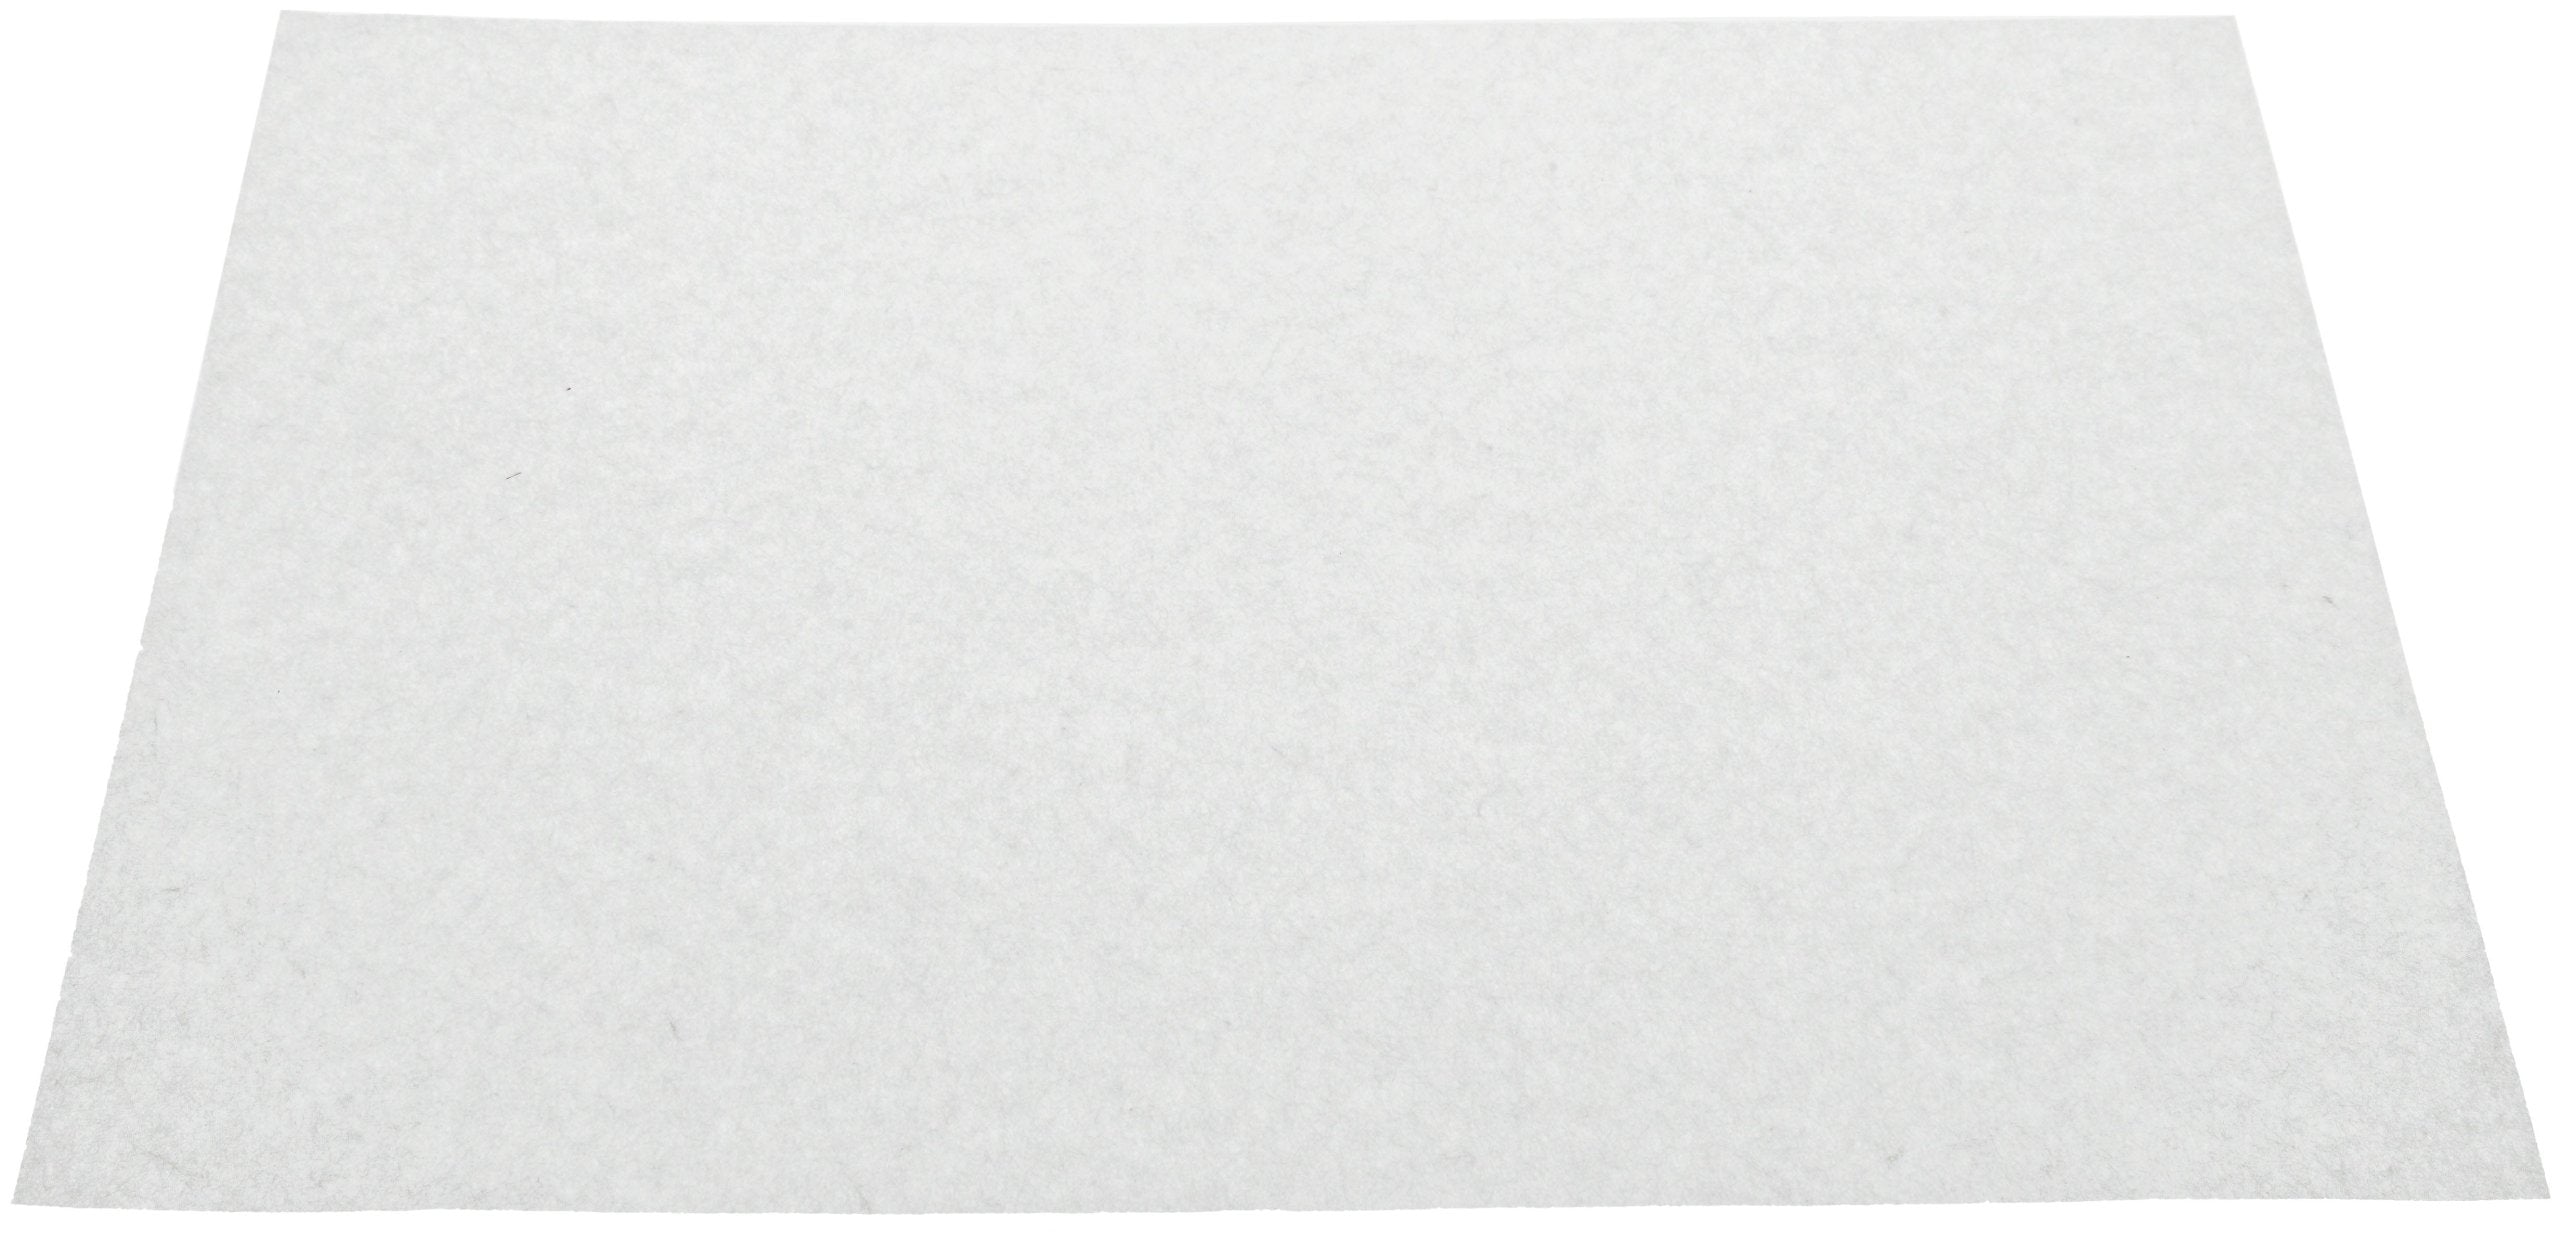 Whatman 10427813 Blotting Paper, Pure Cellulose, Grade GB003 Sheets, 16 x 18, 100/pk